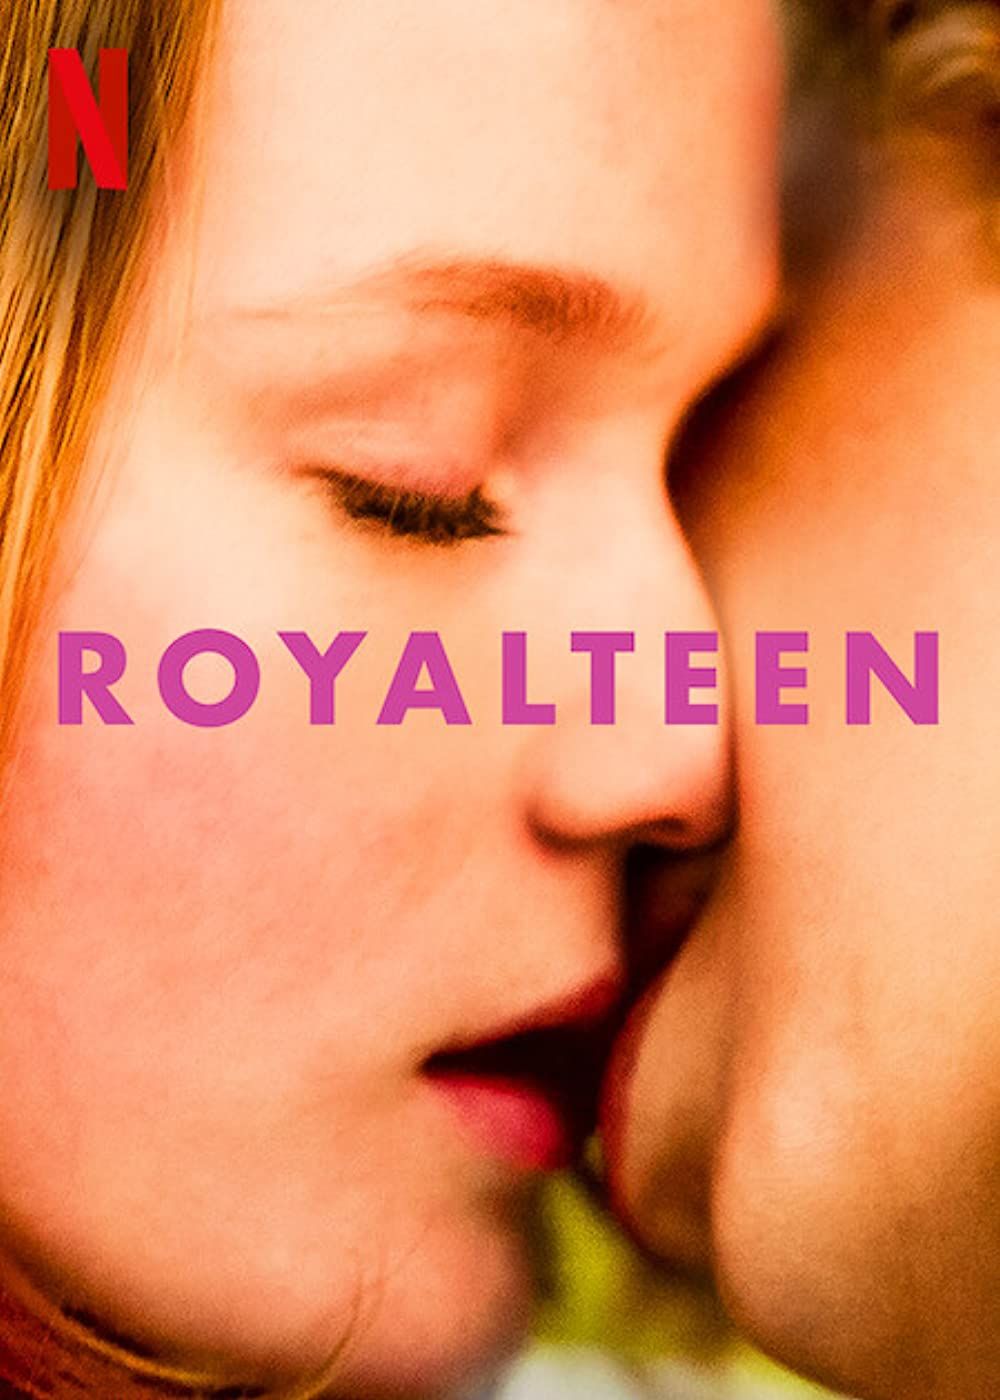 [18+] Royalteen (2022) Hindi Dubbed HDRip download full movie